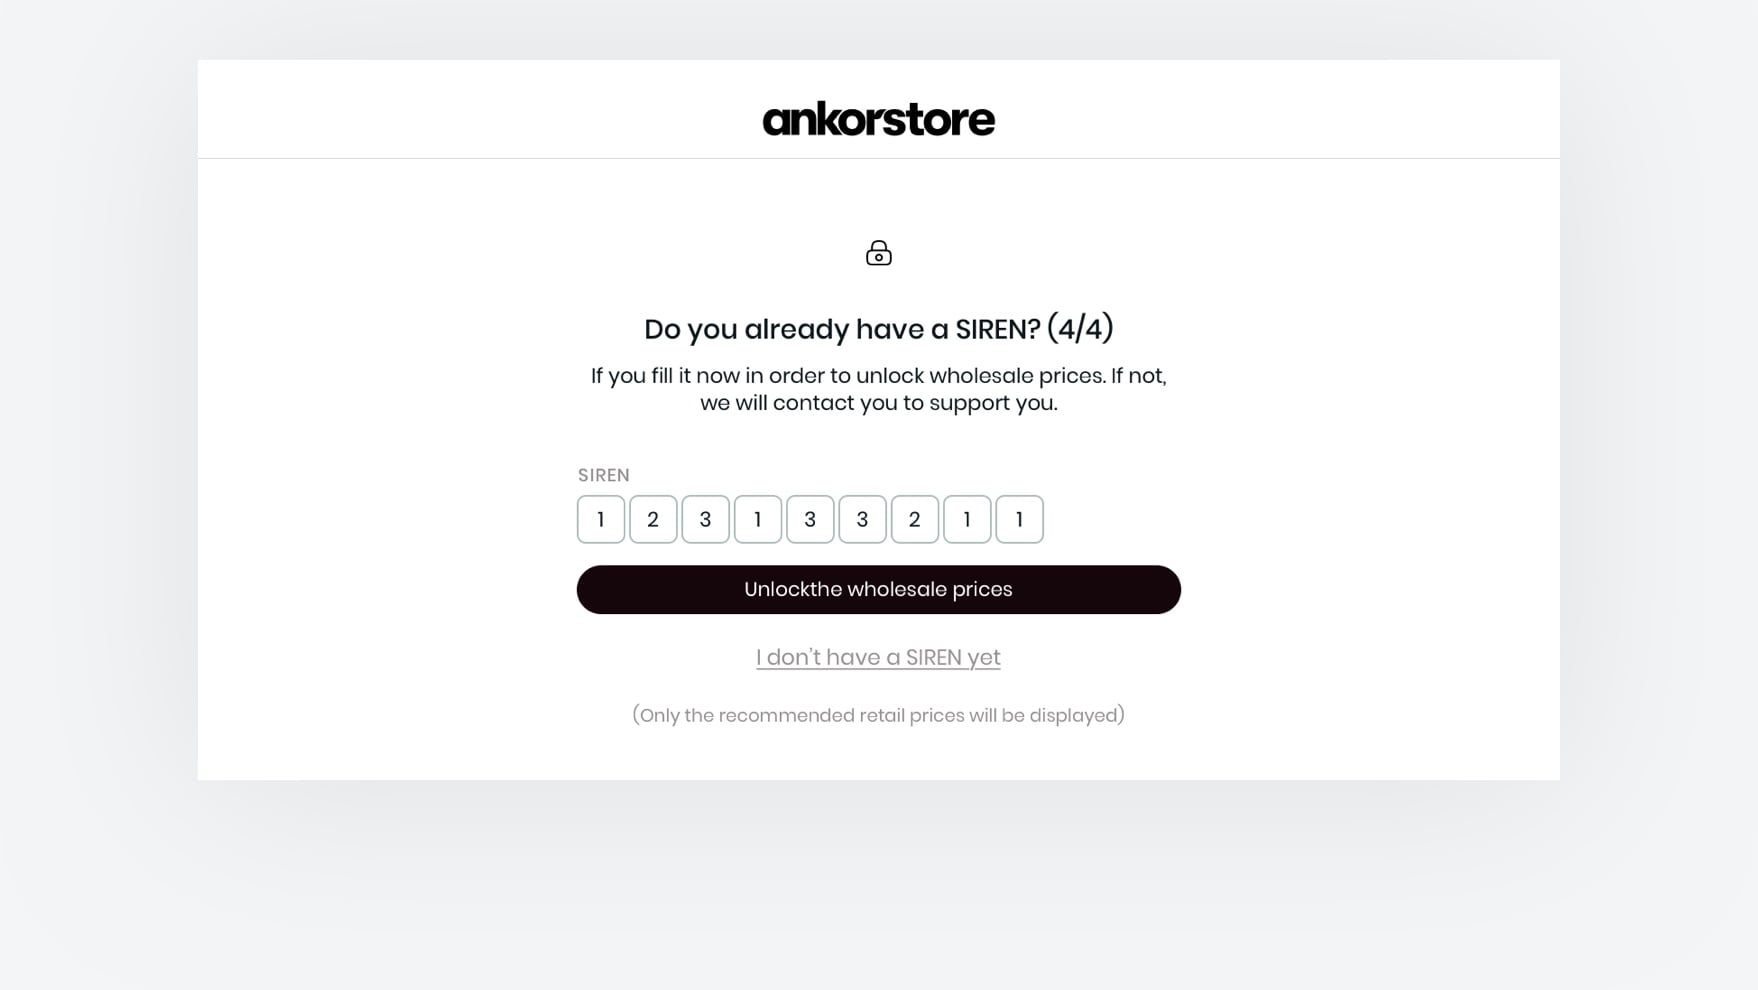 Vendor registration optimized by using SIREN identification